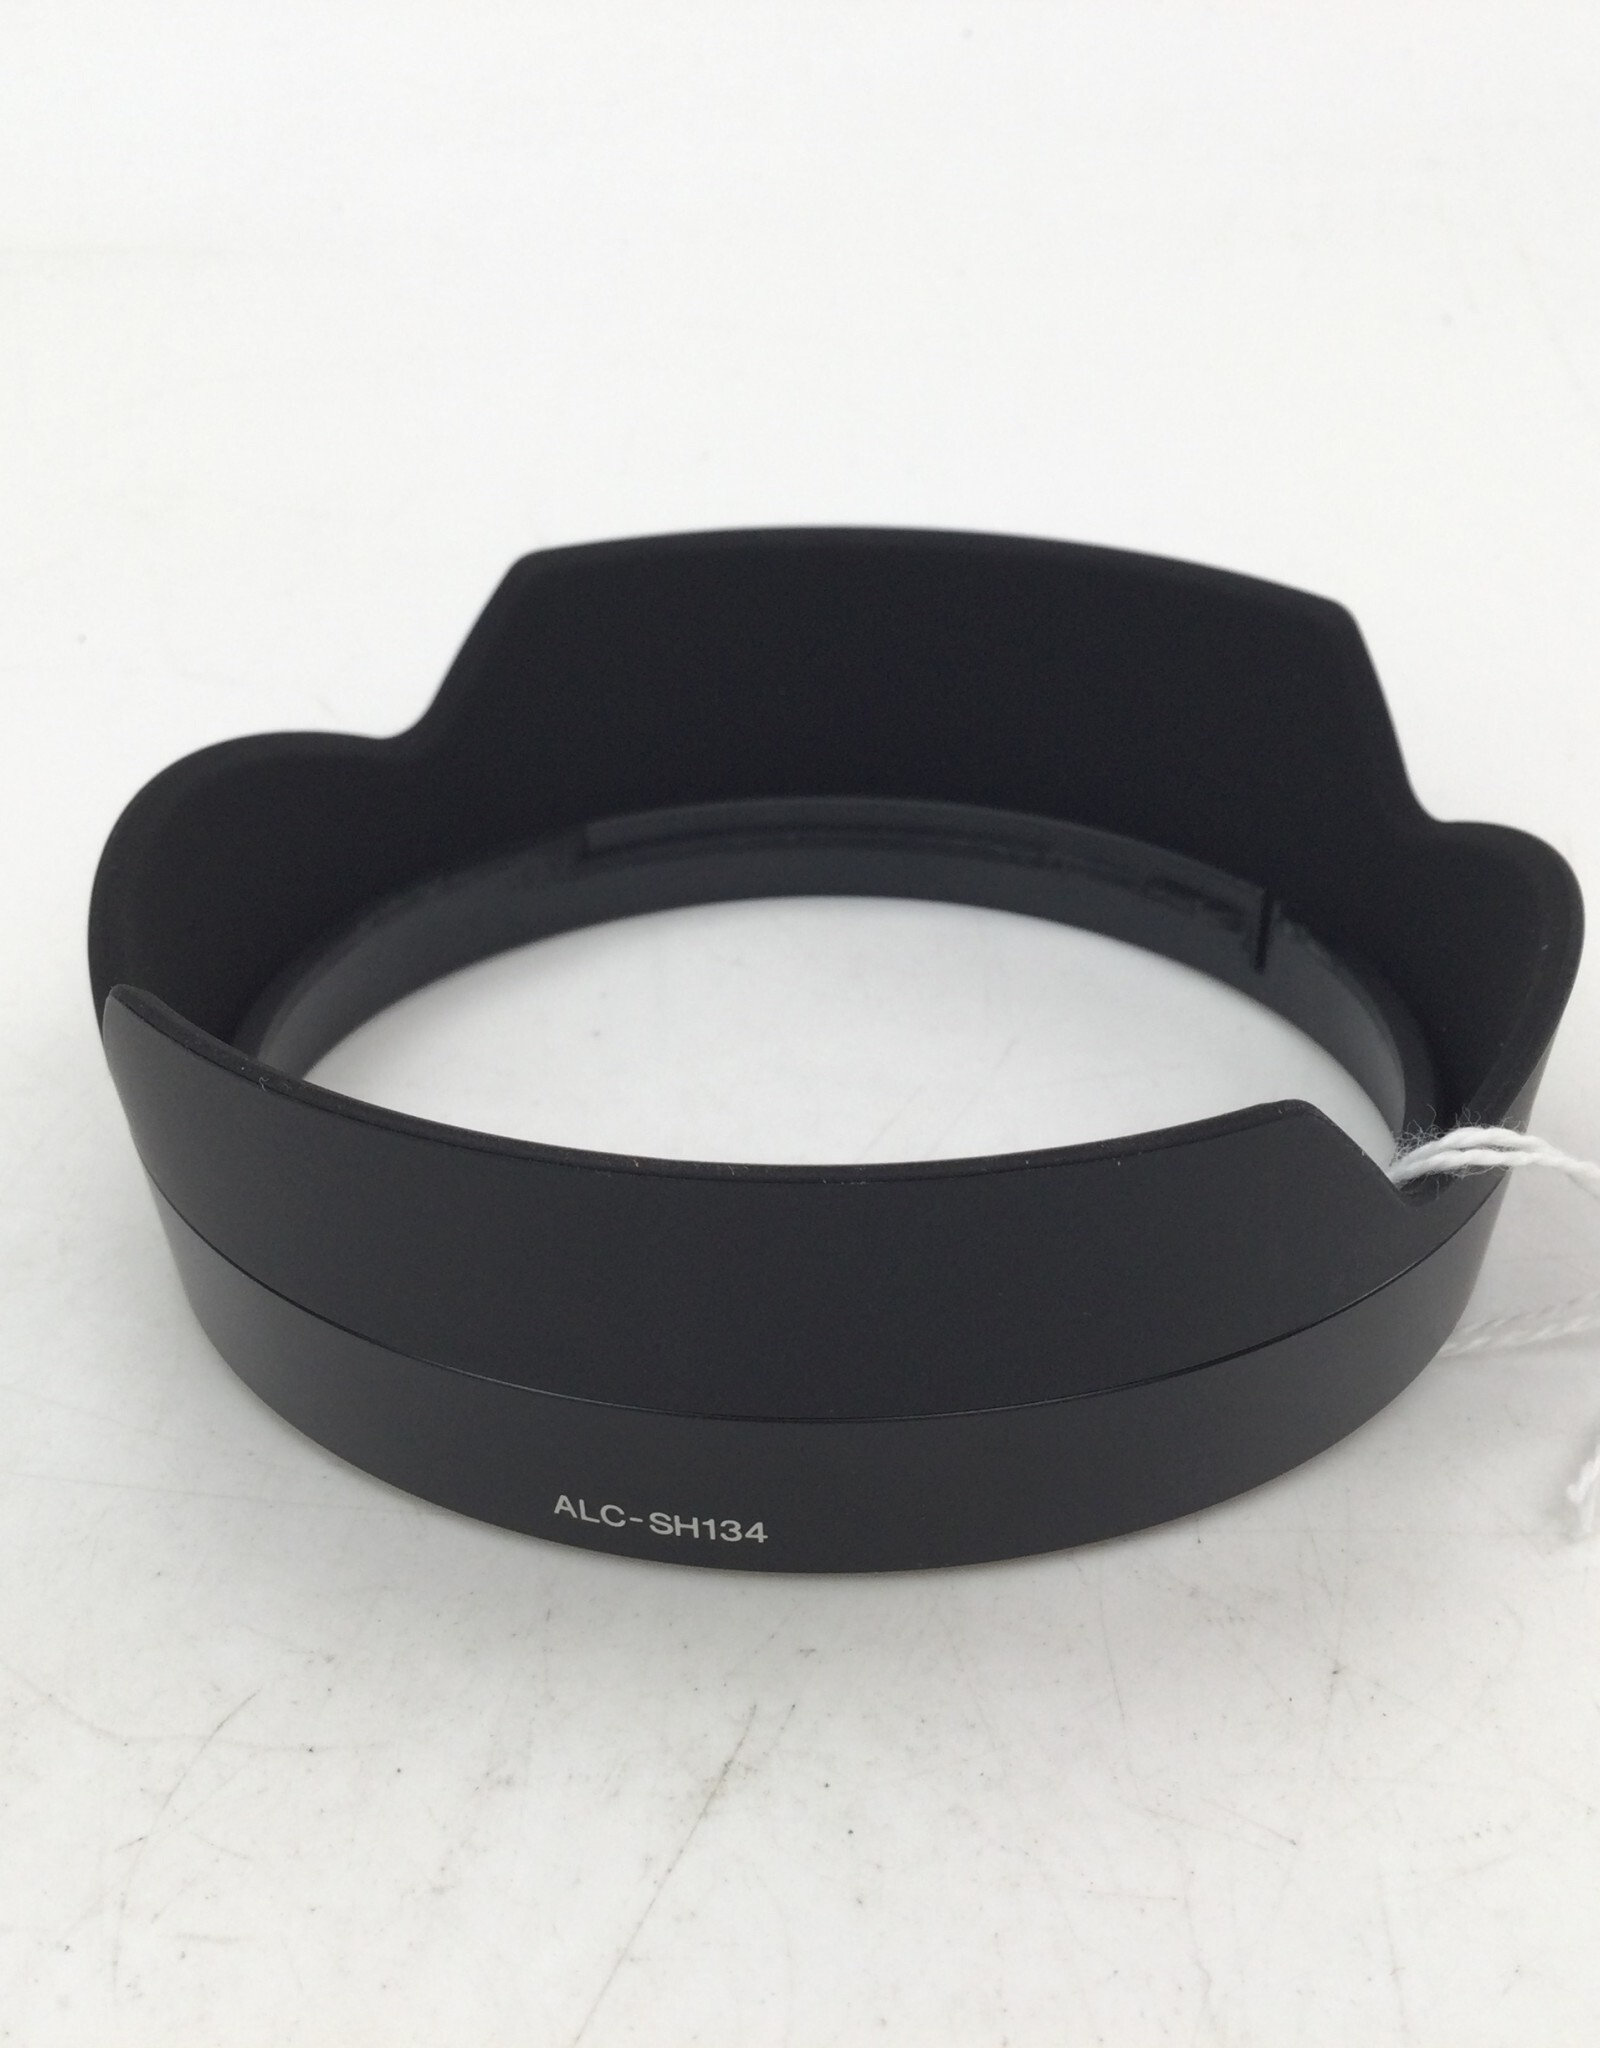 SONY Sony ALC-SH134 Lens Hood for FE 16-35mm F4 ZA OSS Used Good